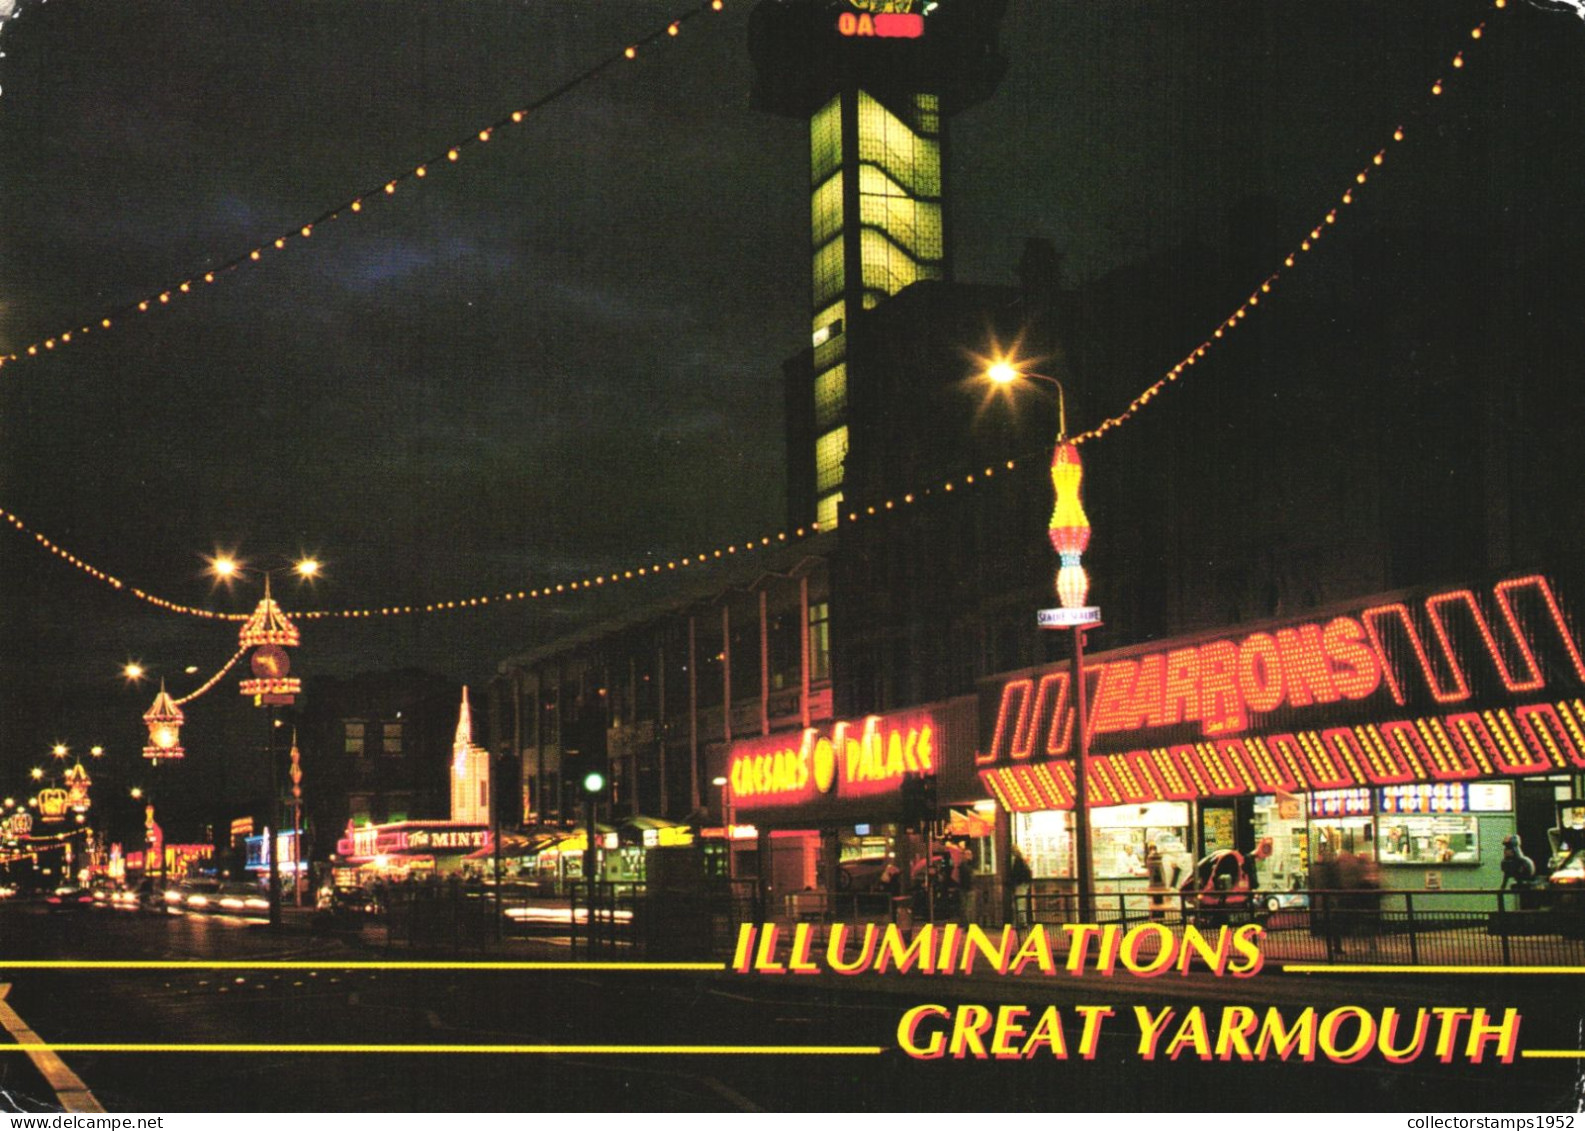 GREAT YARMOUTH, ARCHITECTURE, ILLUMINATIONS, SHOPS, UNITED KINGDOM - Great Yarmouth